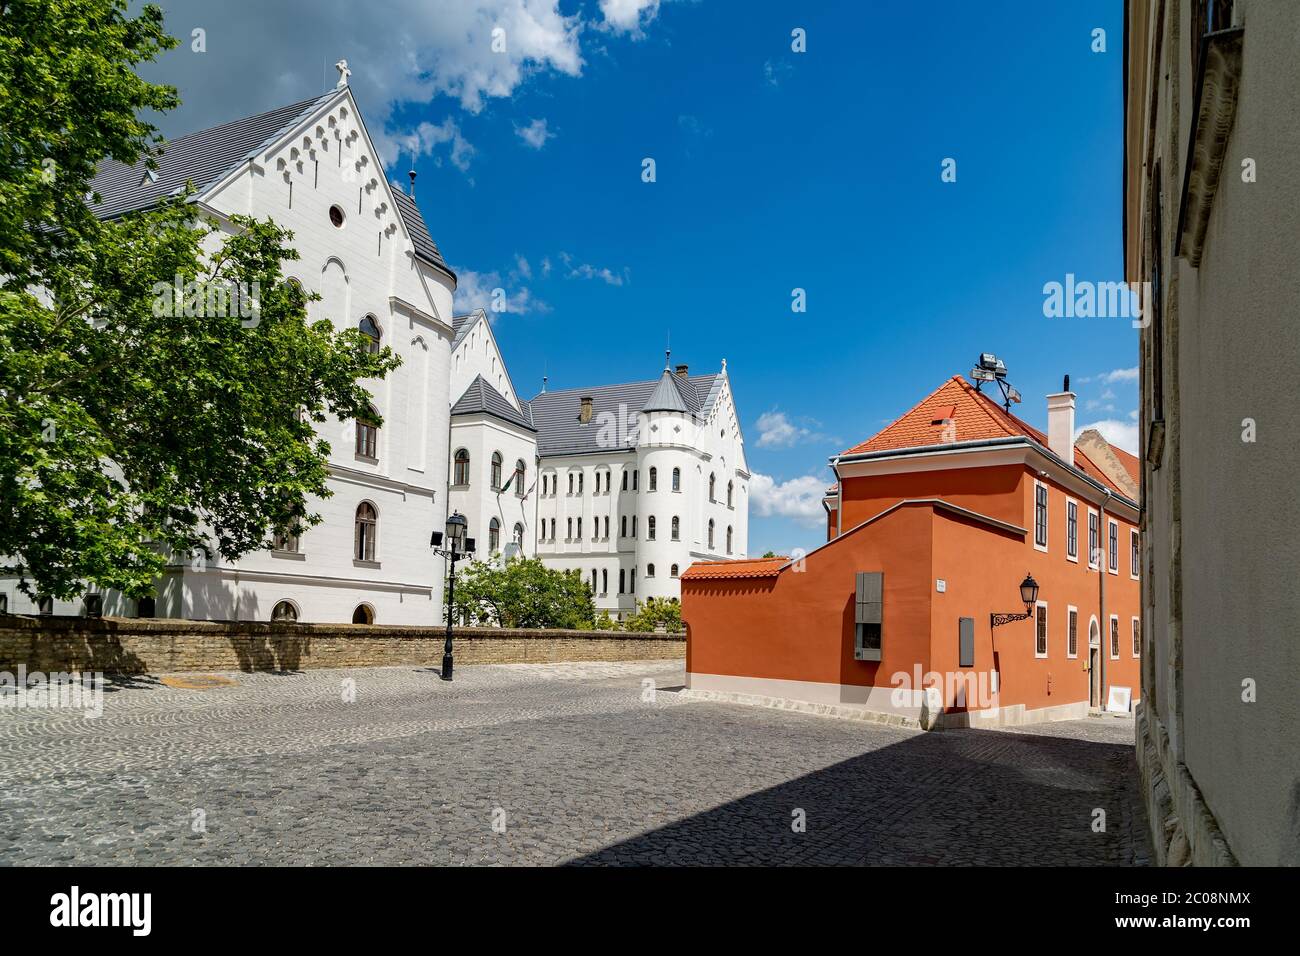 Gyor,Hungary - Jun 02 2020 : View of the building of Roman Catholic Theological College of Gyor. Stock Photo